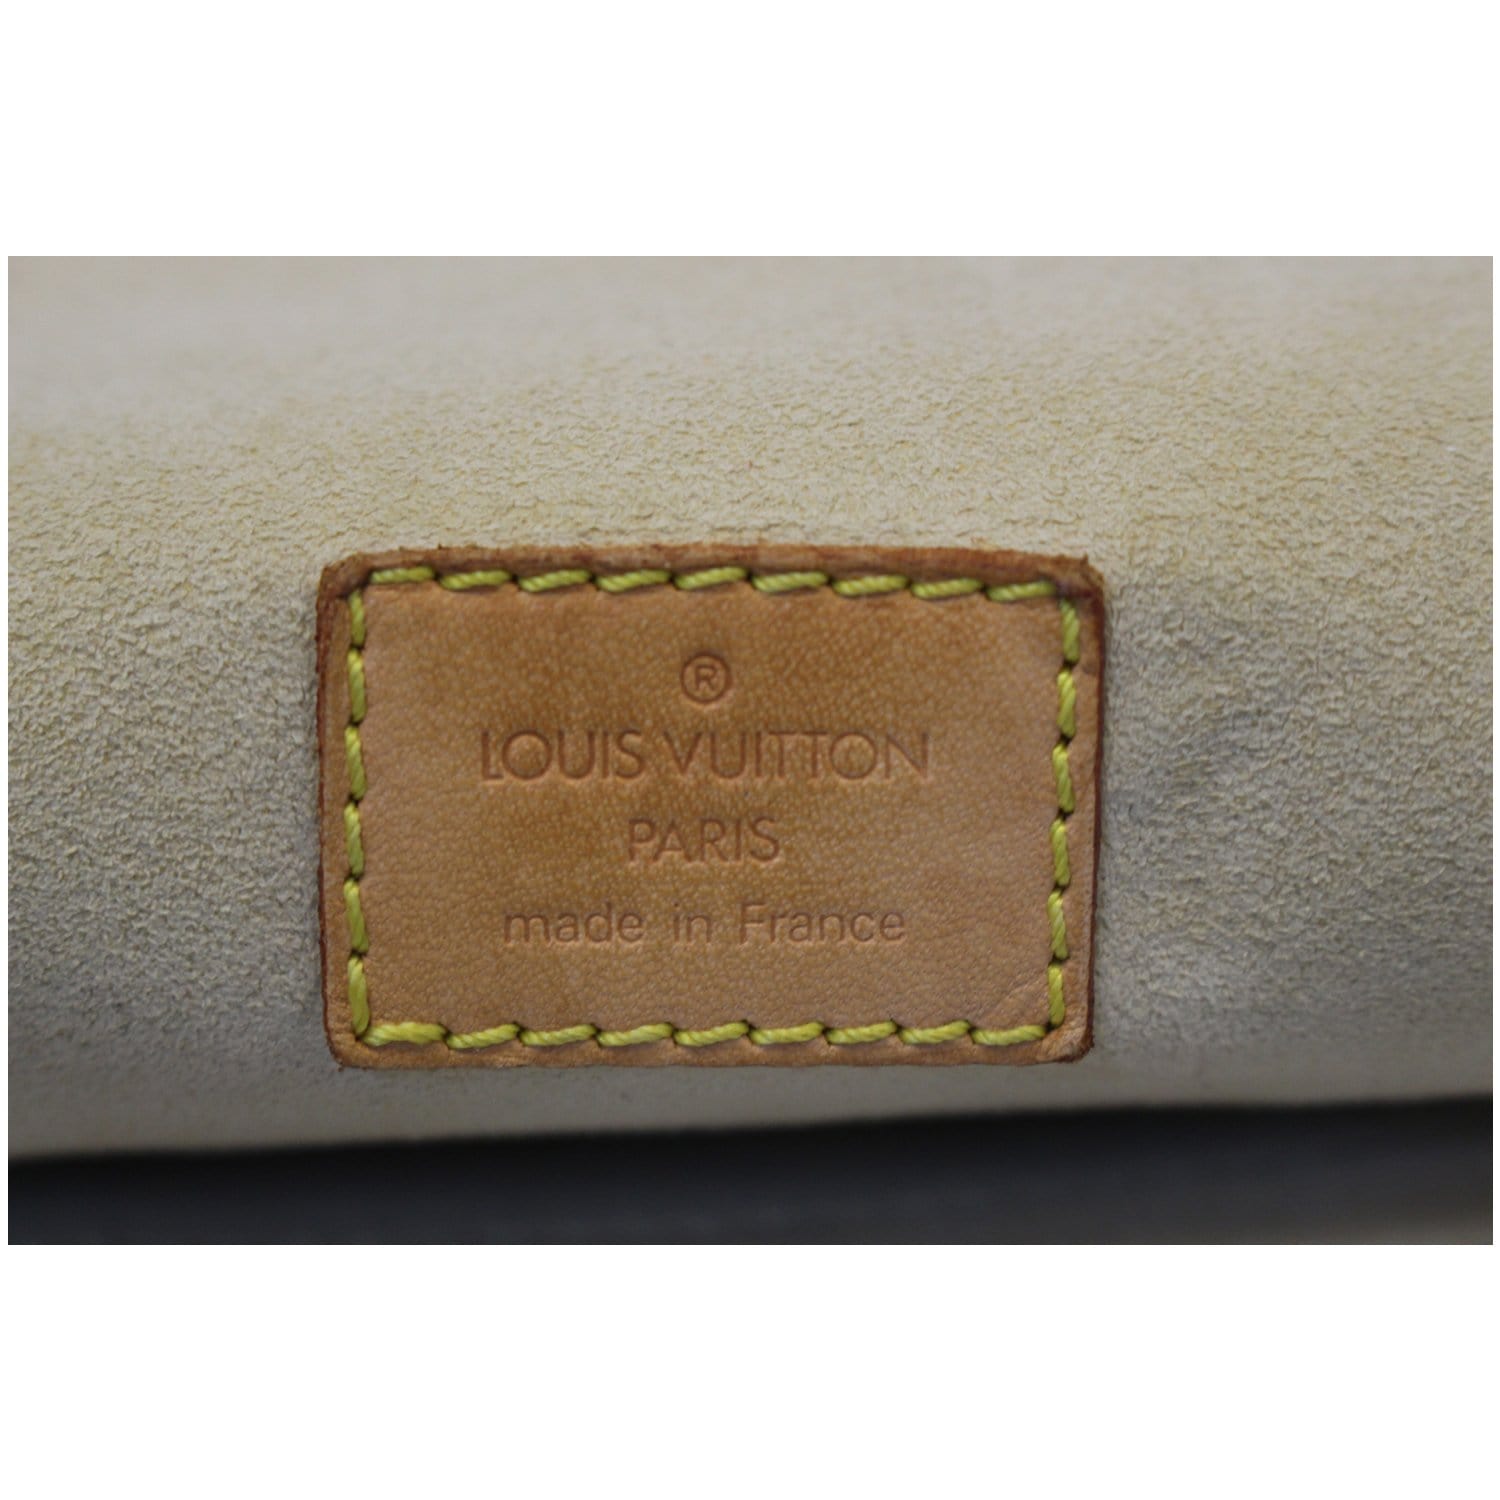 Louis Vuitton Monogram Hudson Pm 531020